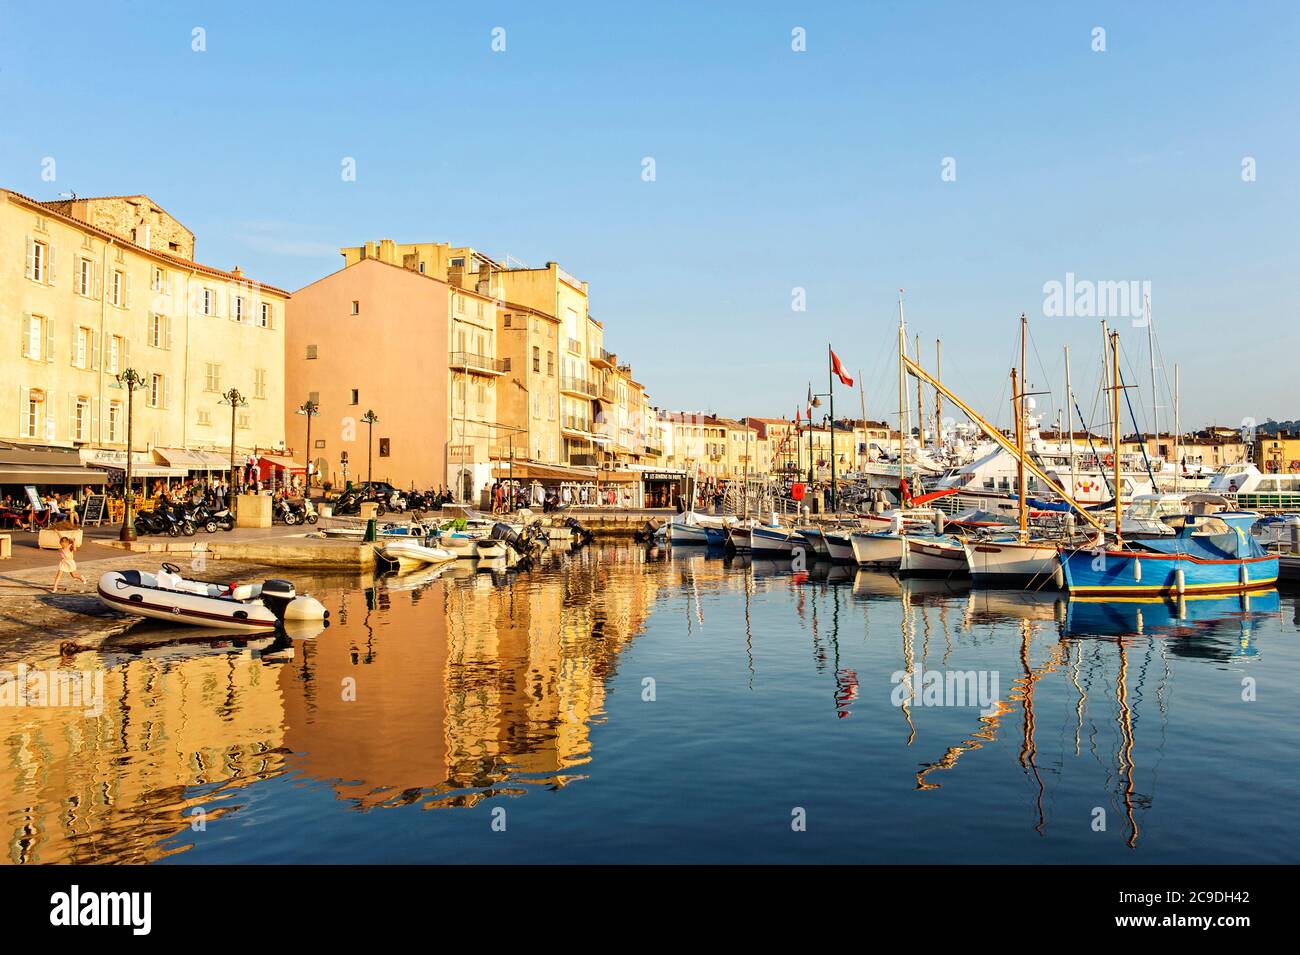 Saint Tropez - France - Europe, 25. Mai 2015: View of Saint-Tropez's small harbor in the Provence-Alpes-Côte d’Azur region. Stock Photo